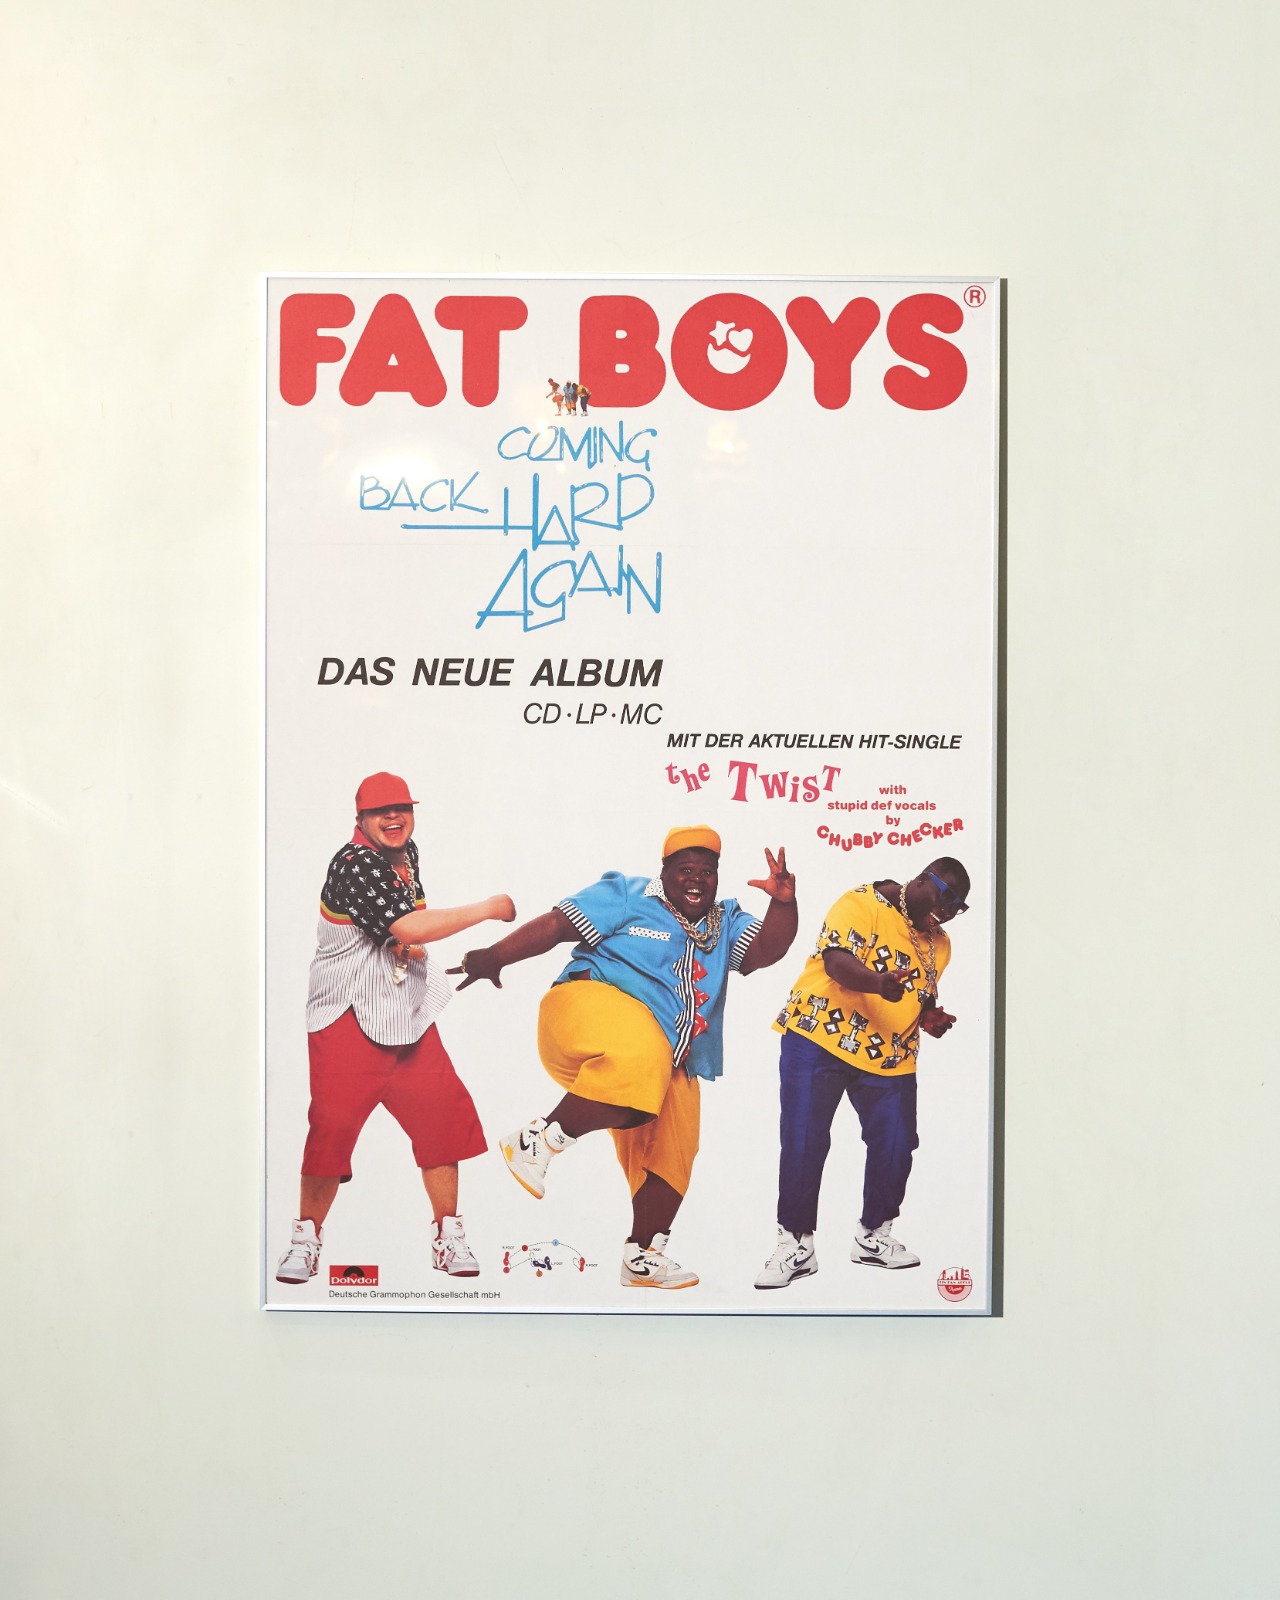 #10236 / Fat Boys - Coming back hard again 1989 Promo Poster